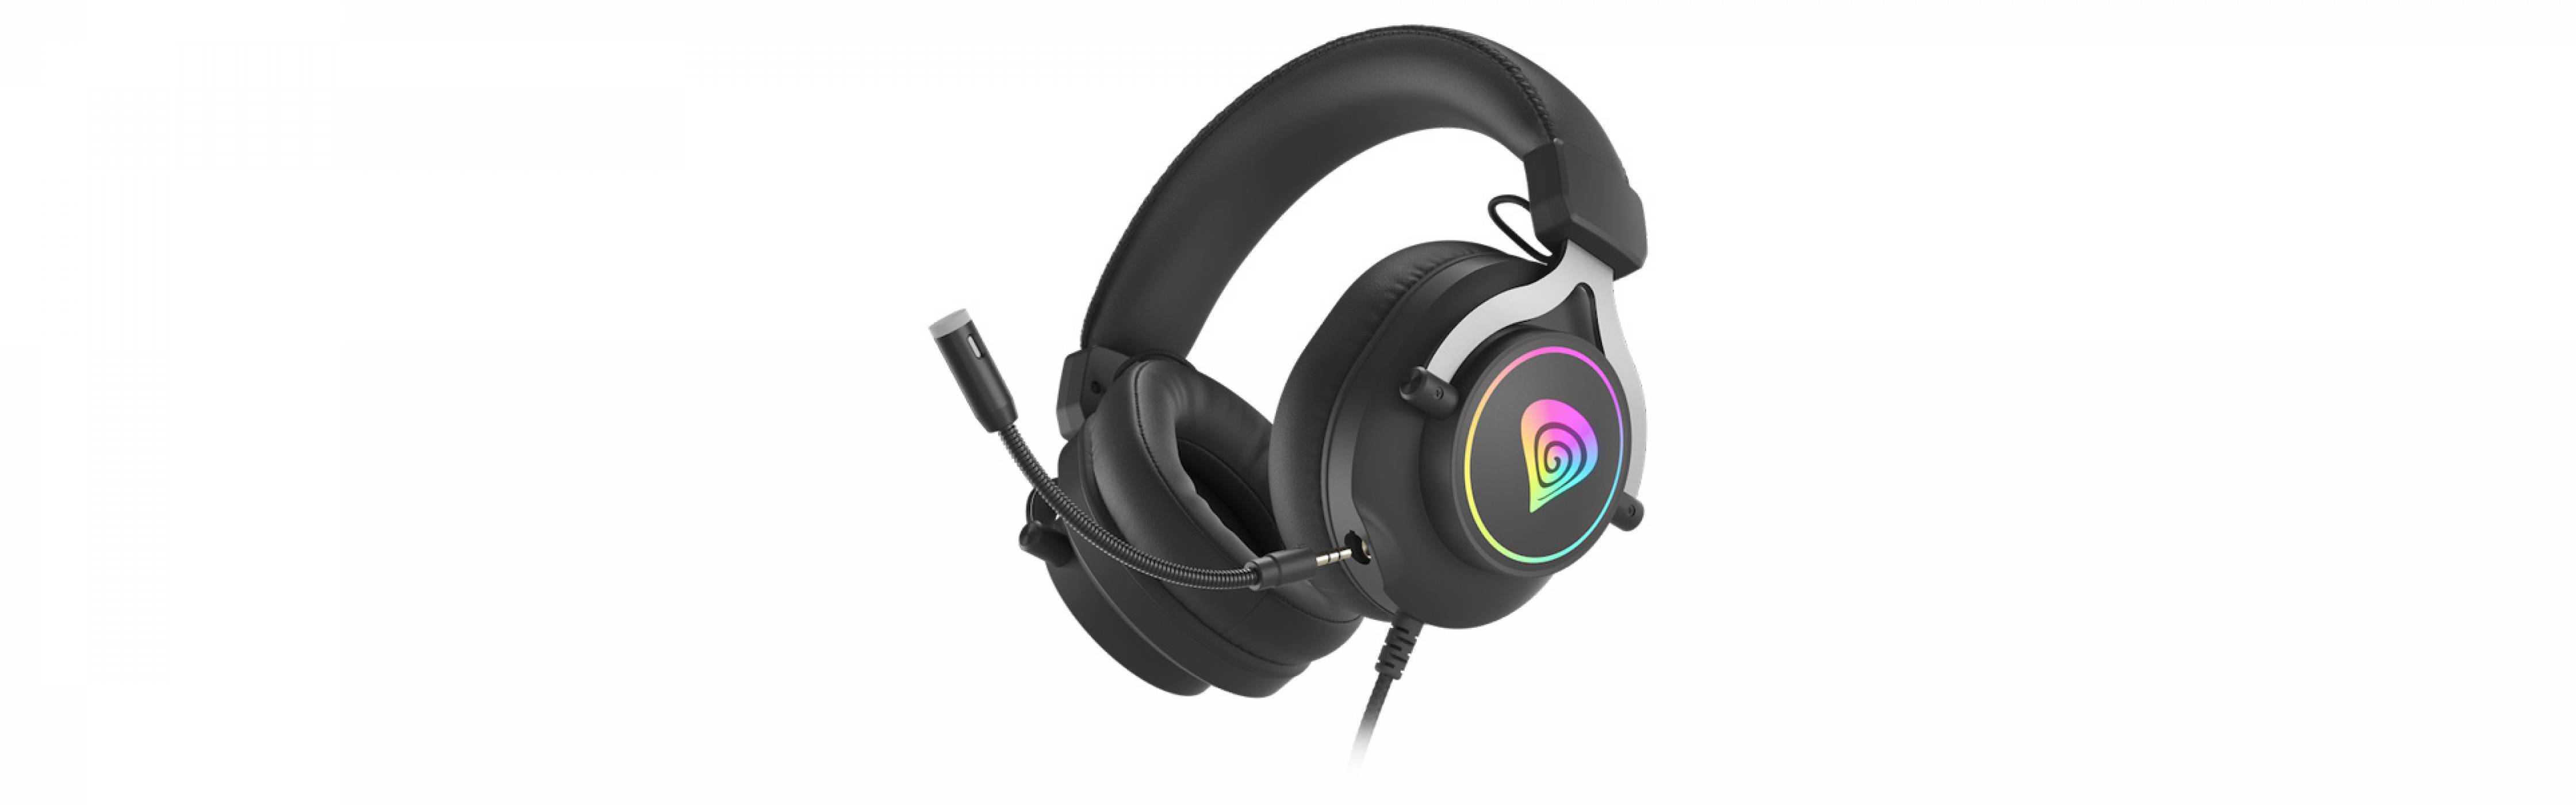 Genesis пуска нови премиум слушалки - Neon 750 RGB